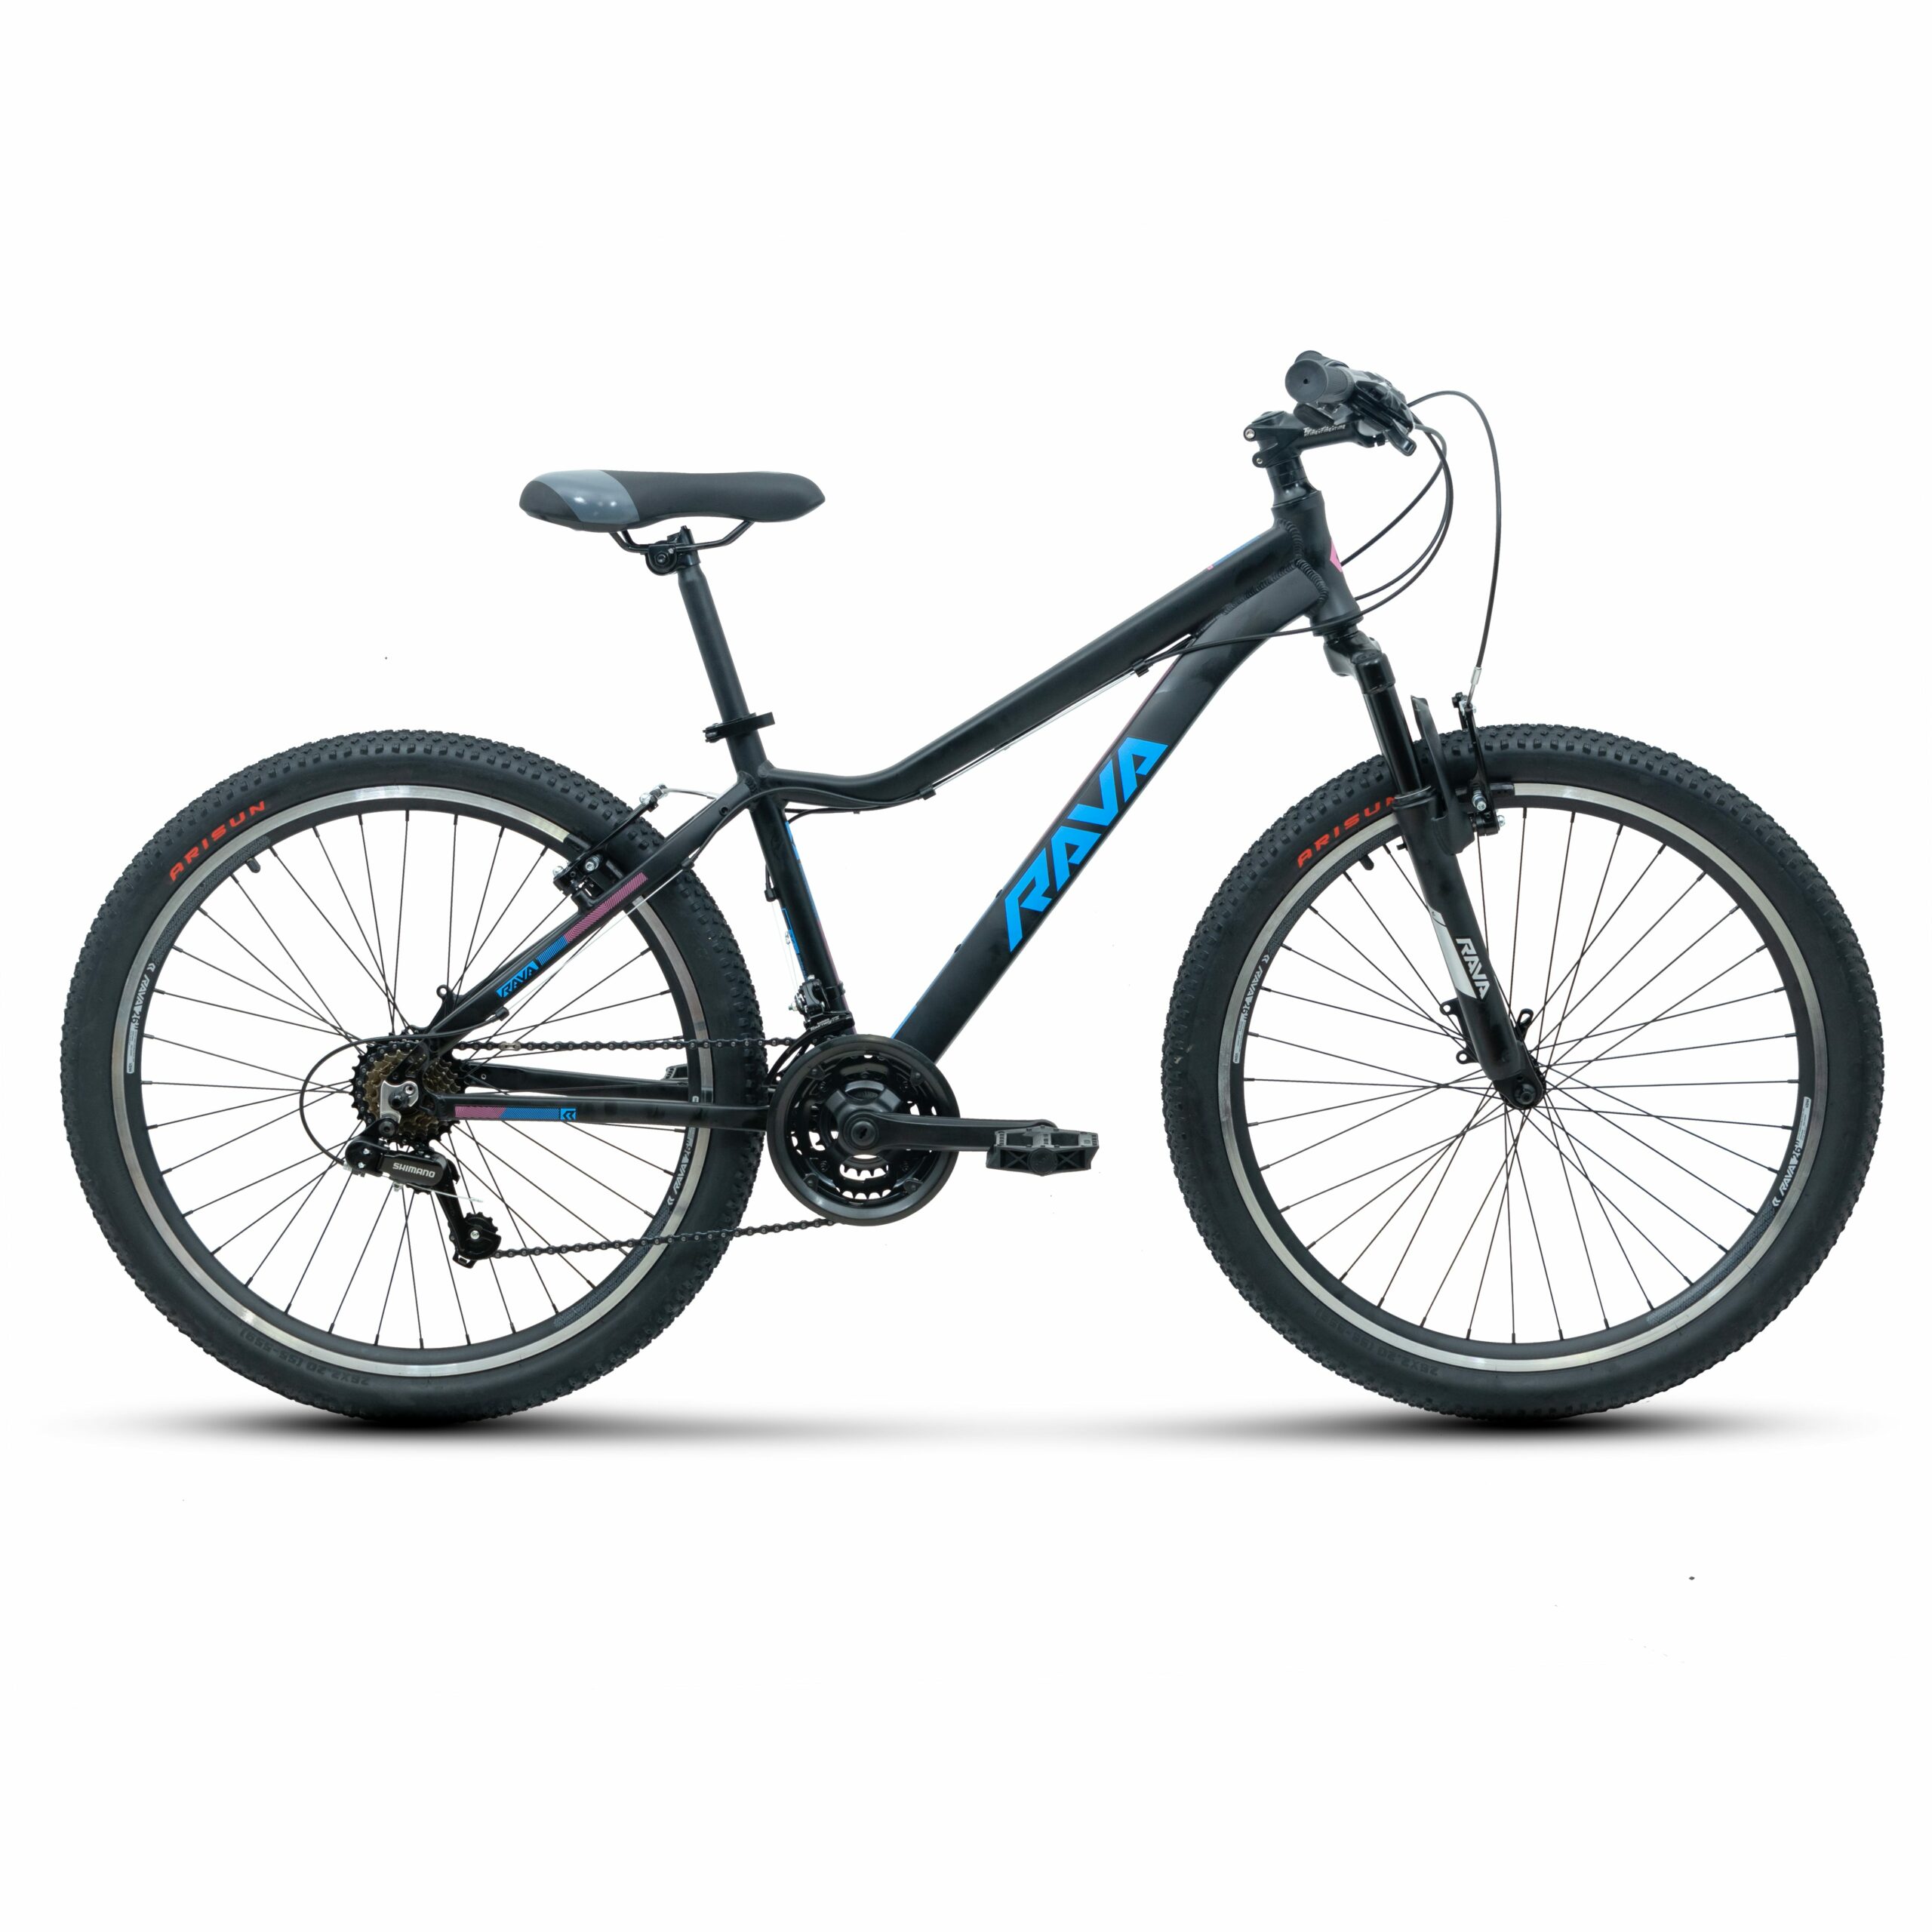 Bicicleta Rava Land Aro 26″ - 15.5", Preto/Azul